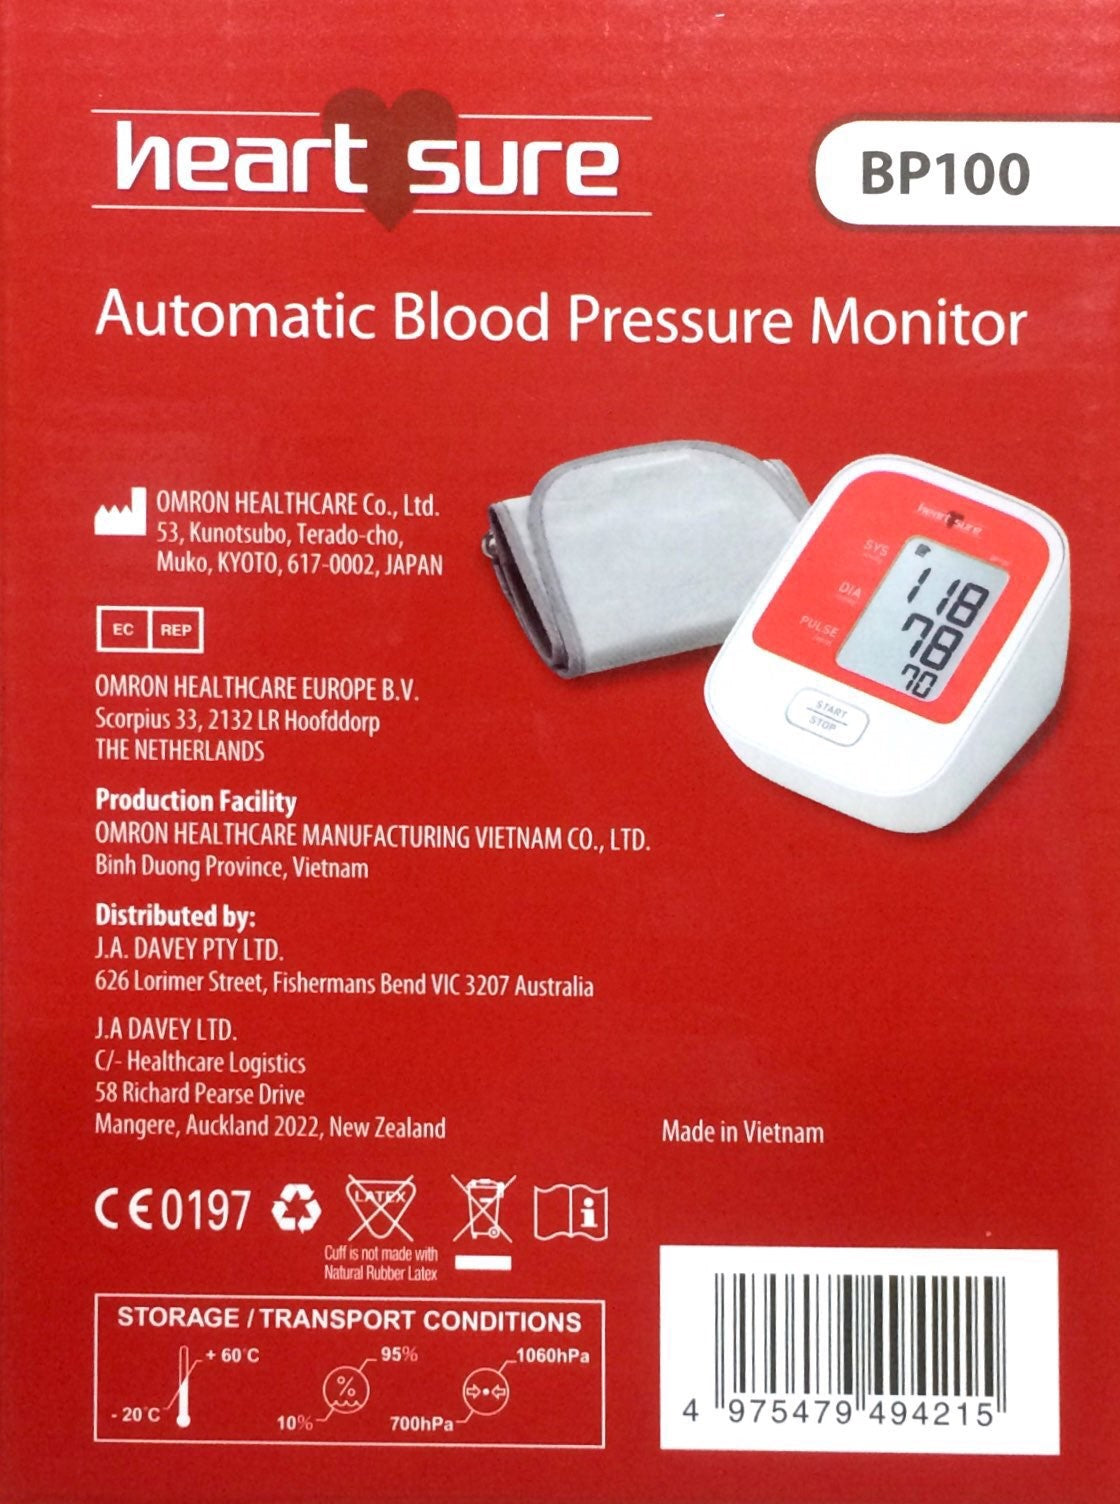 Omron Heartsure Blood Pressure Monitor BP100